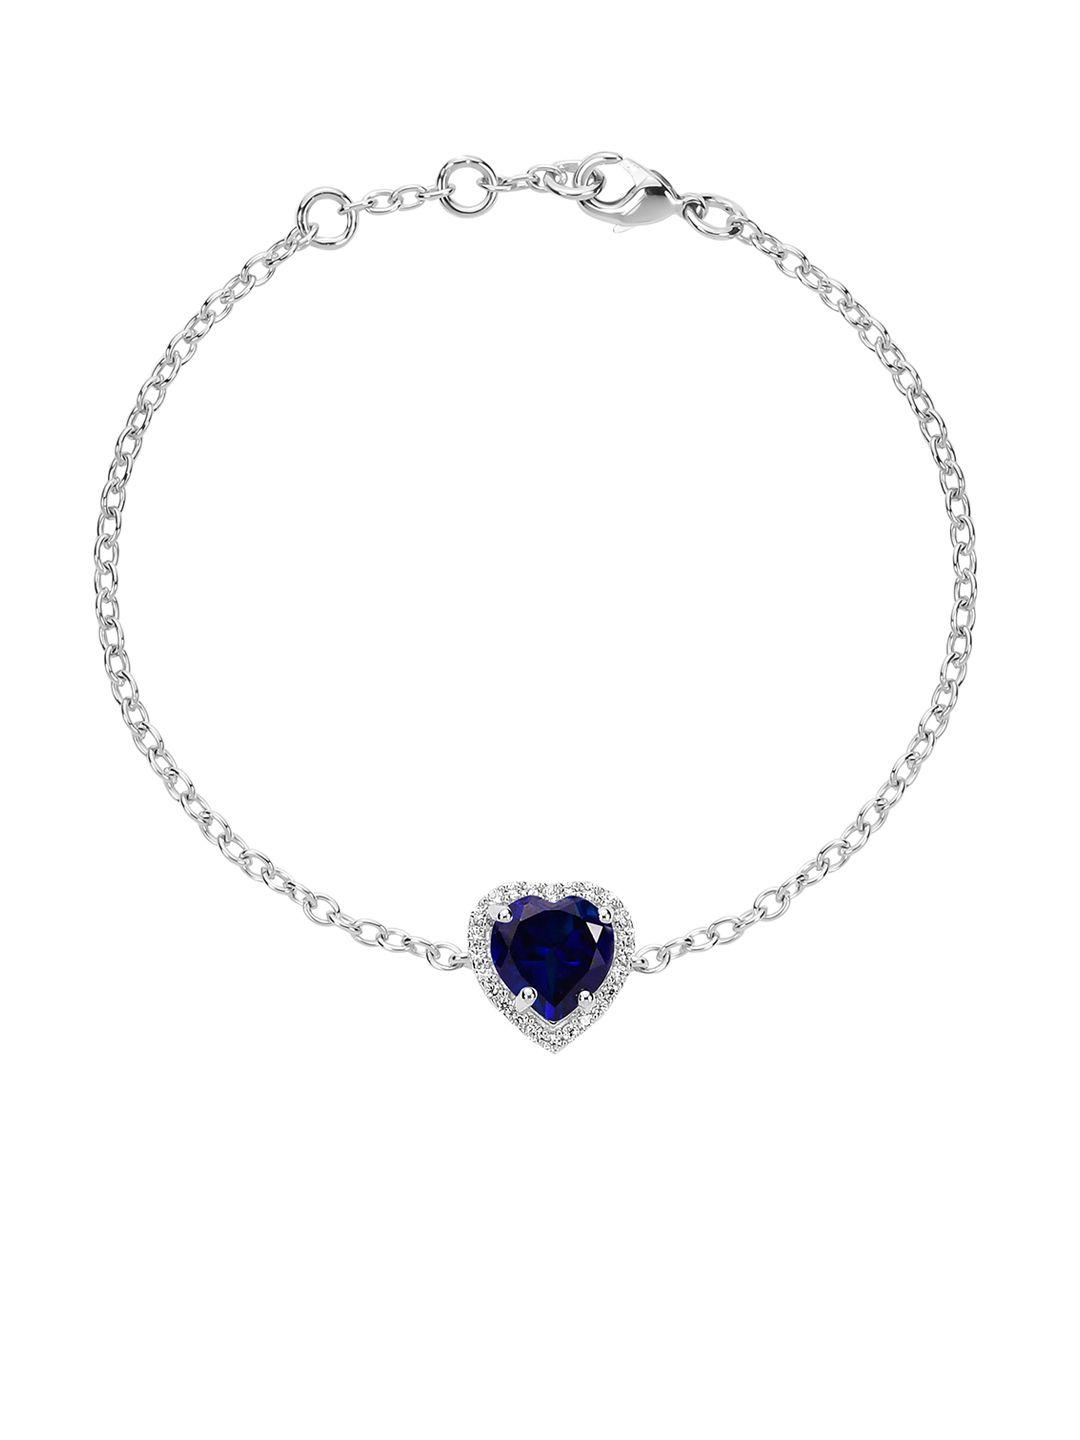 la soula unisex blue & silver-toned 925 sterling silver wraparound bracelet